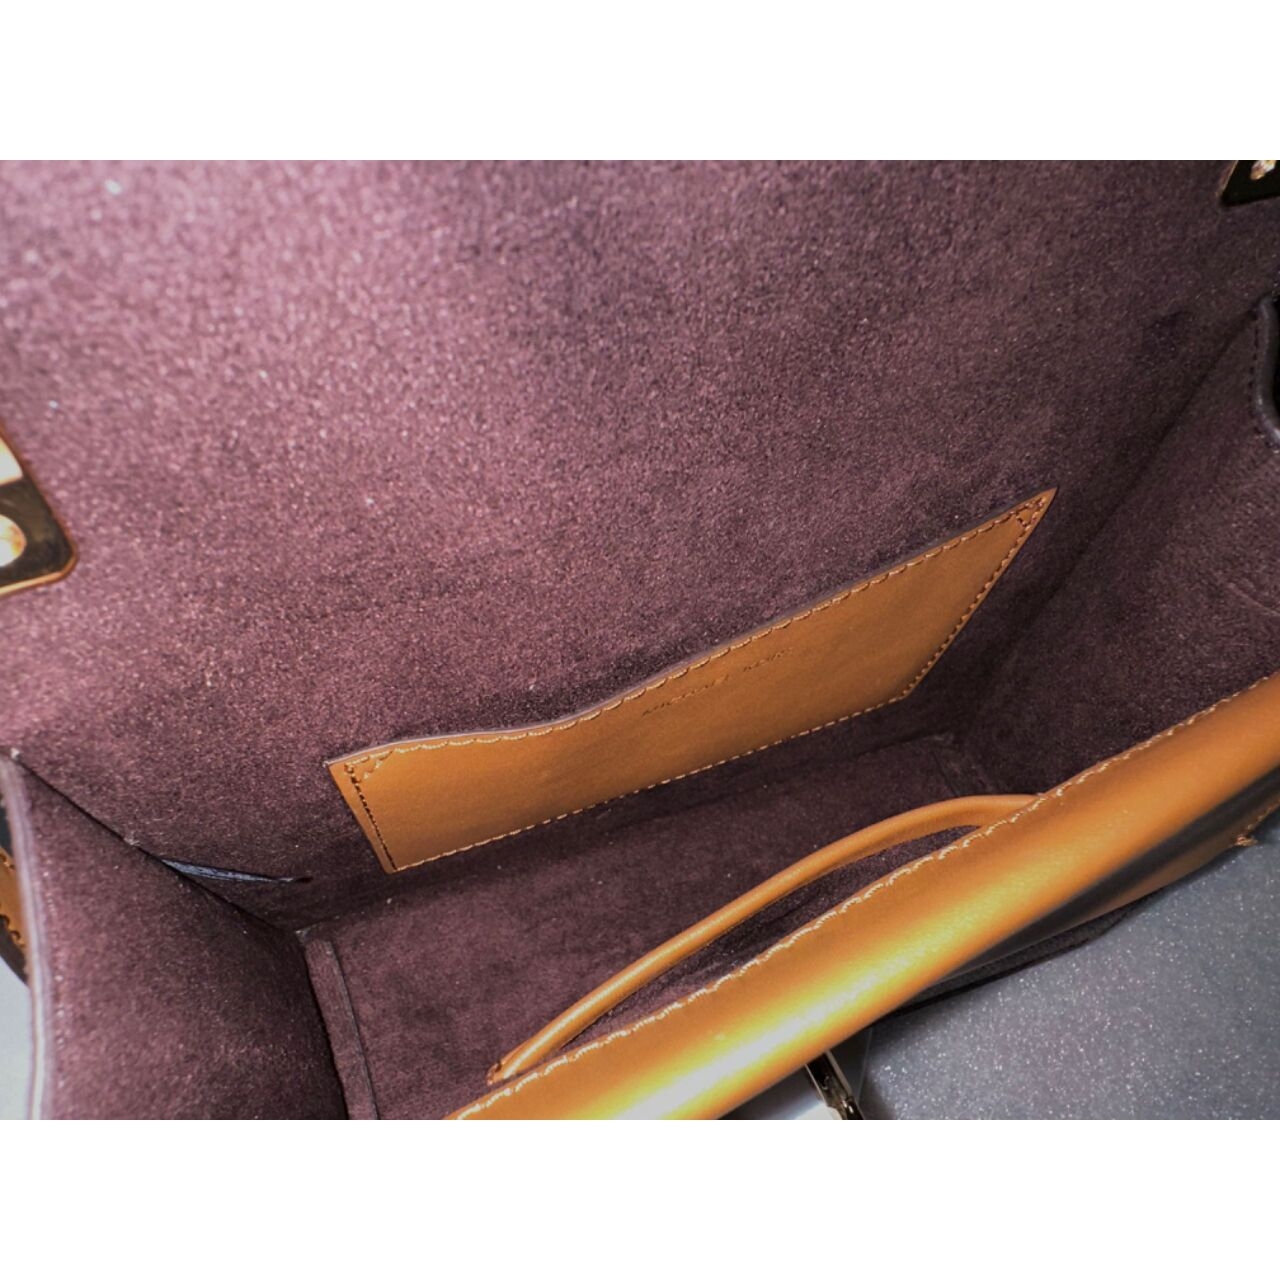 Michael Kors Brown Shoulder Bag